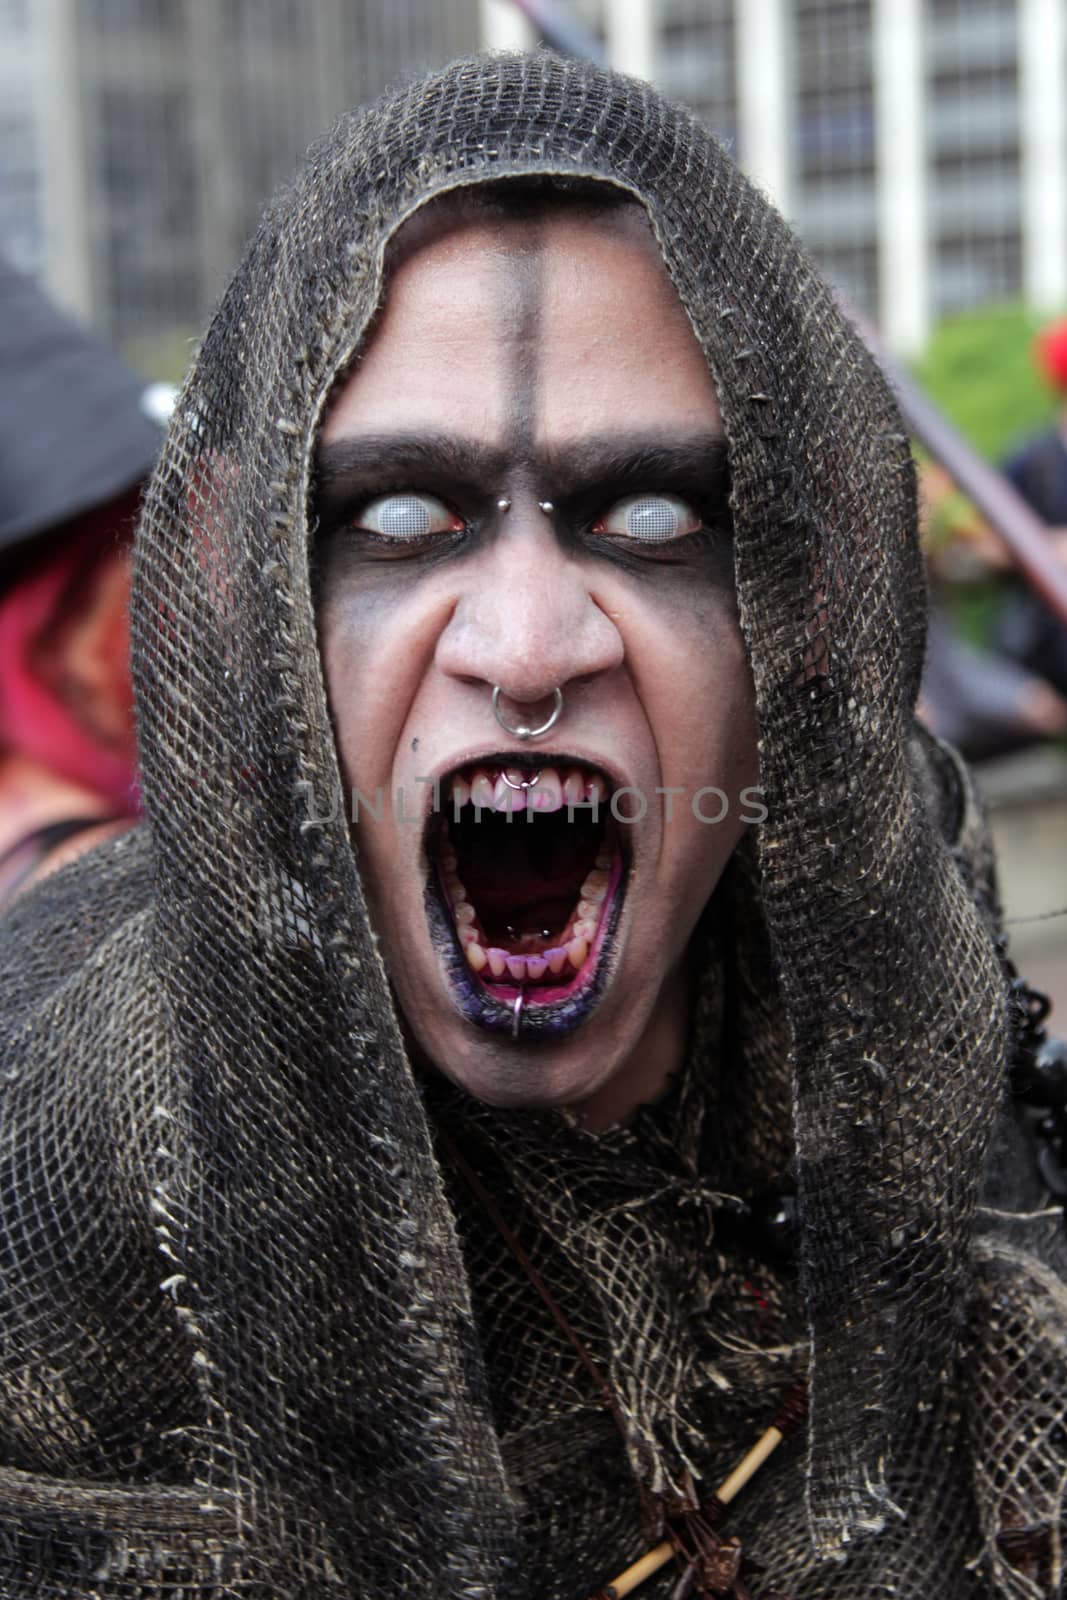 Sao Paulo, Brazil November 11 2015: An unidentified man in scare costumes in the annual event Zombie Walk in Sao Paulo Brazil.